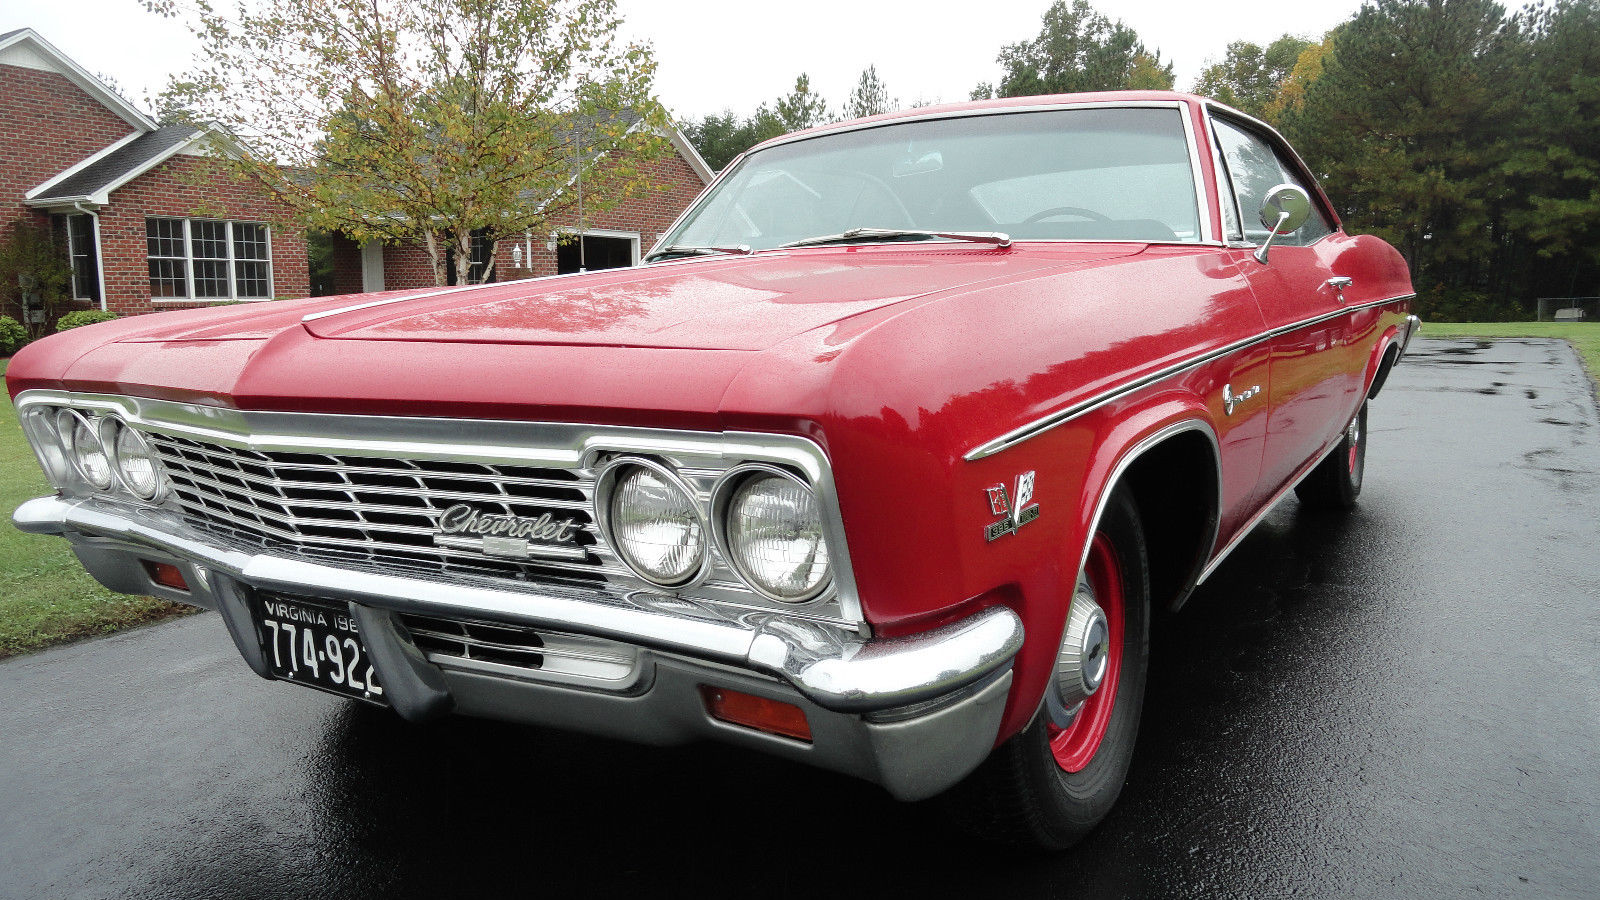 1966 Chevrolet Impala for sale in Apex, North Carolina, United States.